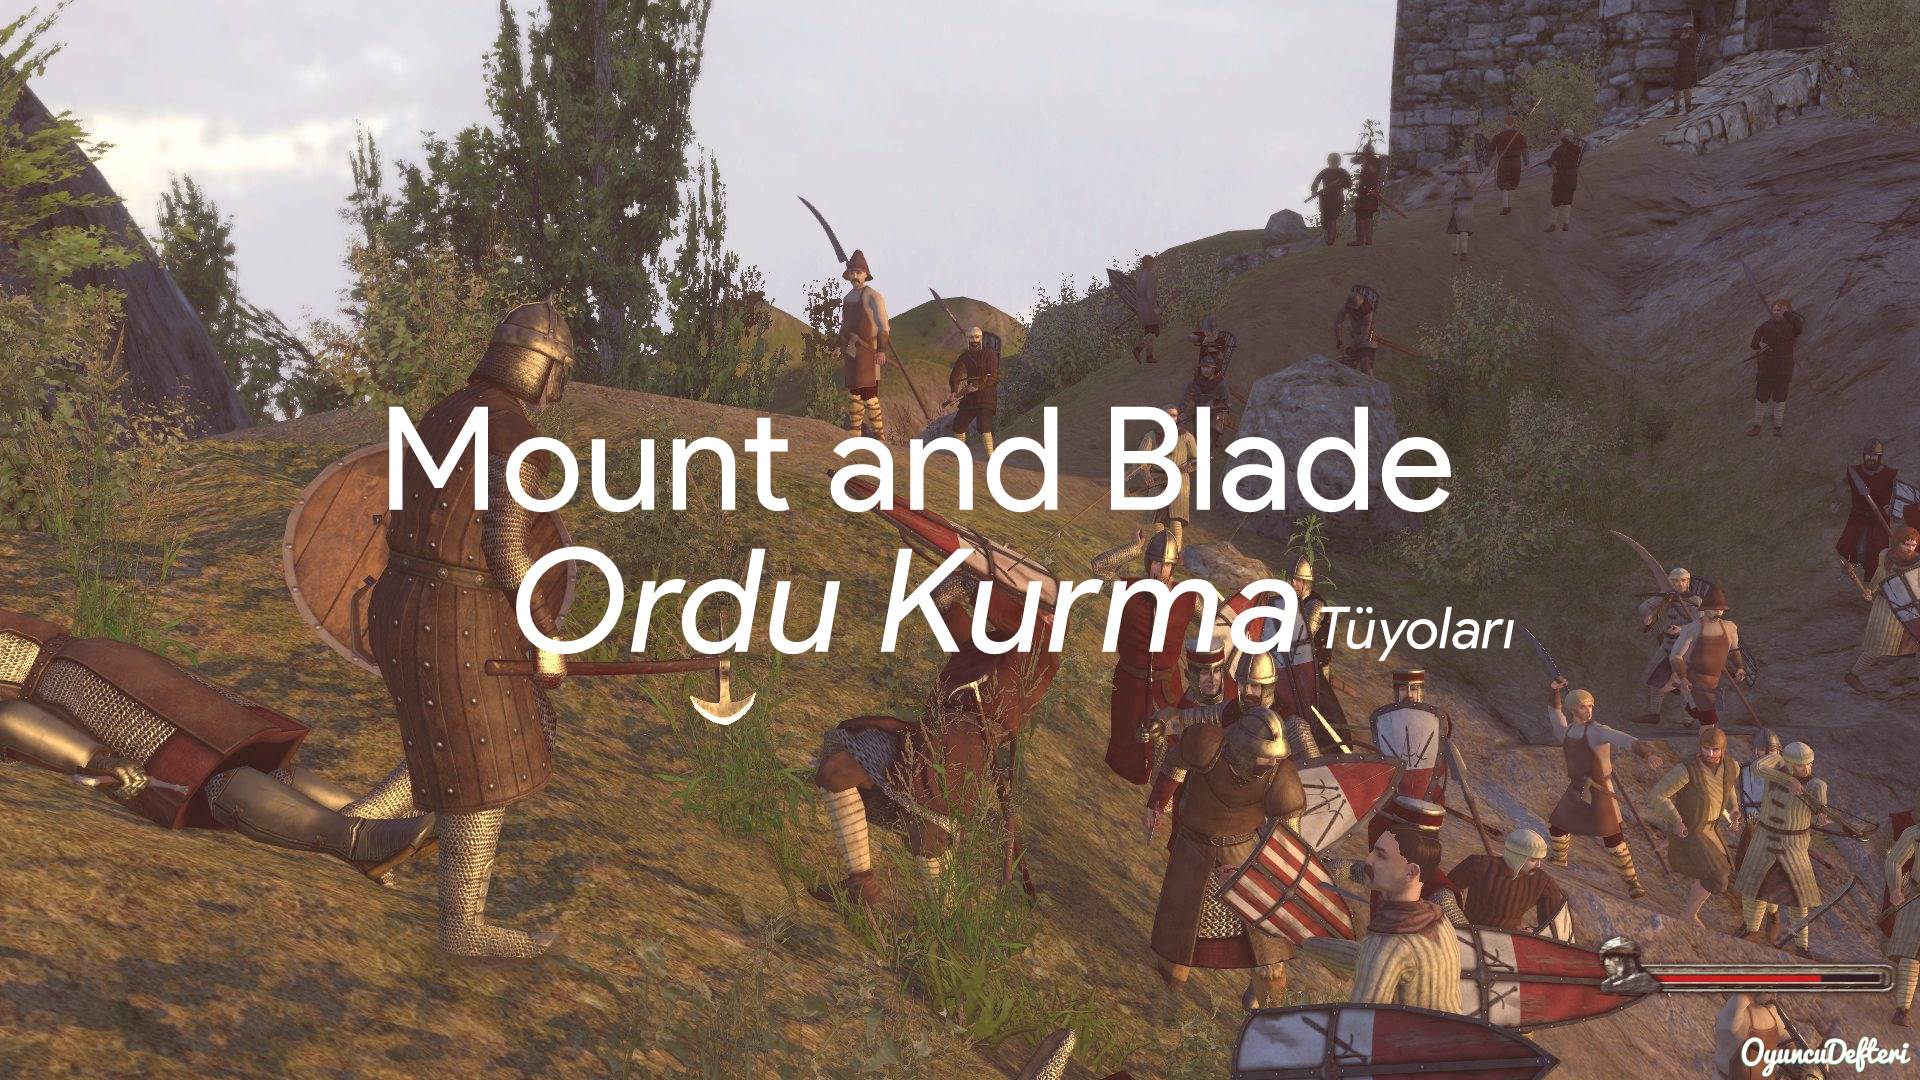 Mount and Blade Ordu kurma